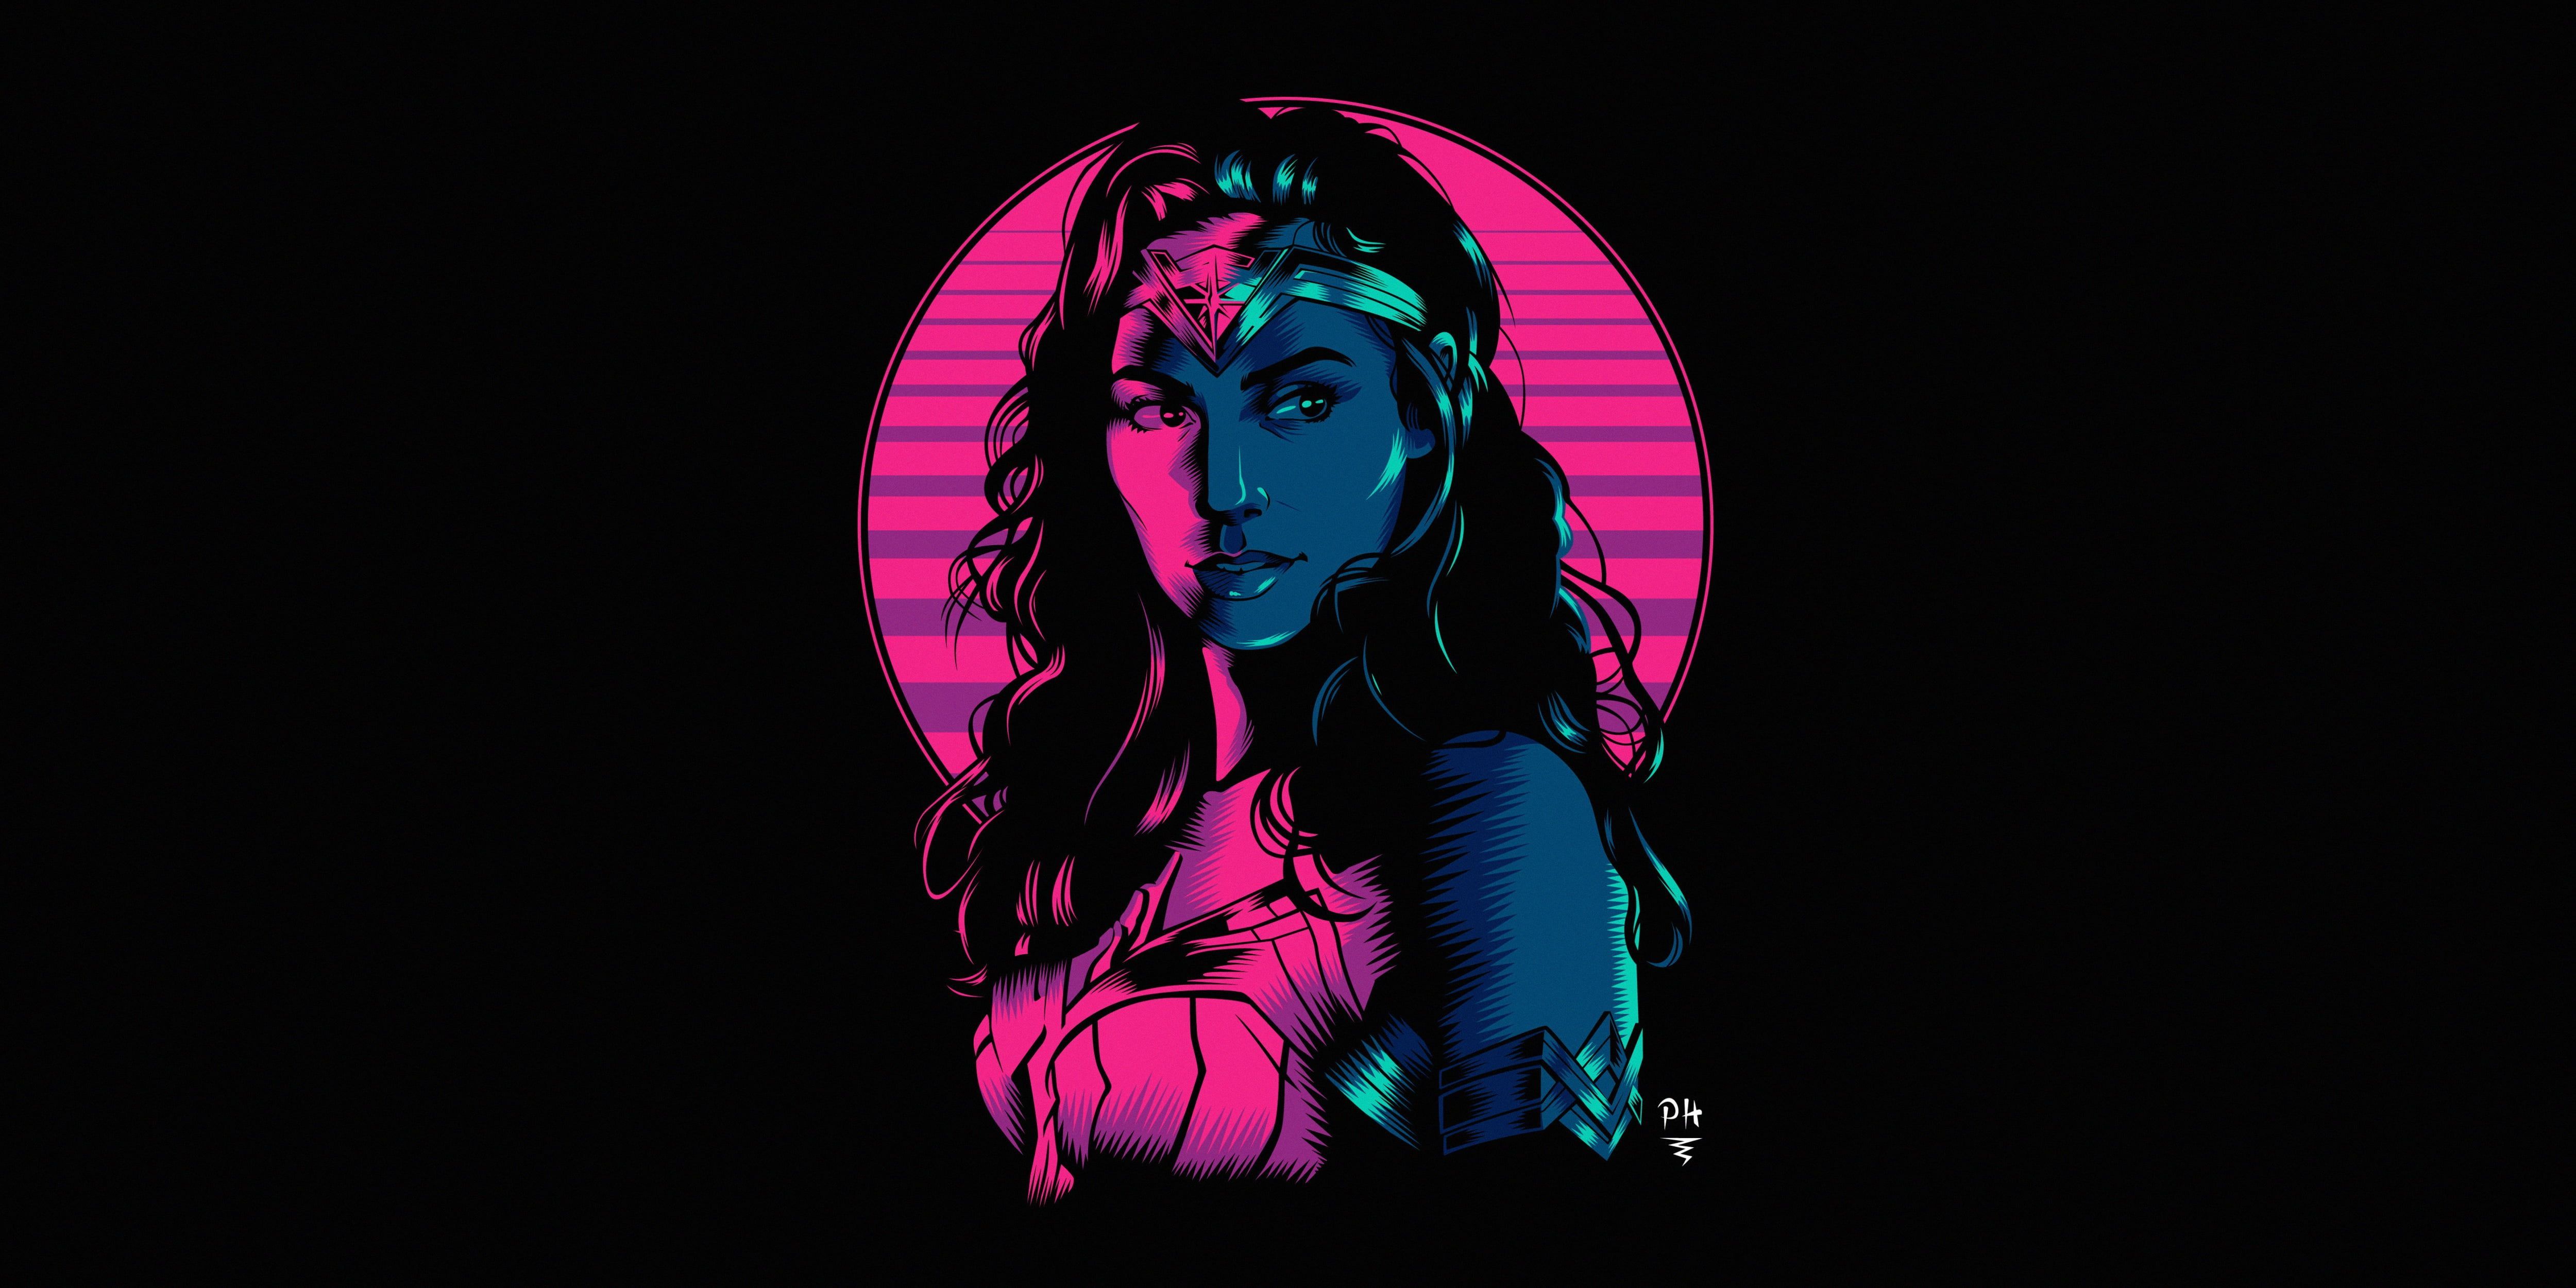 Movie Wonder Woman DC Comics #Girl #Minimalist K #wallpaper #hdwallpaper #desktop. Dc comics wallpaper, Minimalist wallpaper, Wallpaper image hd